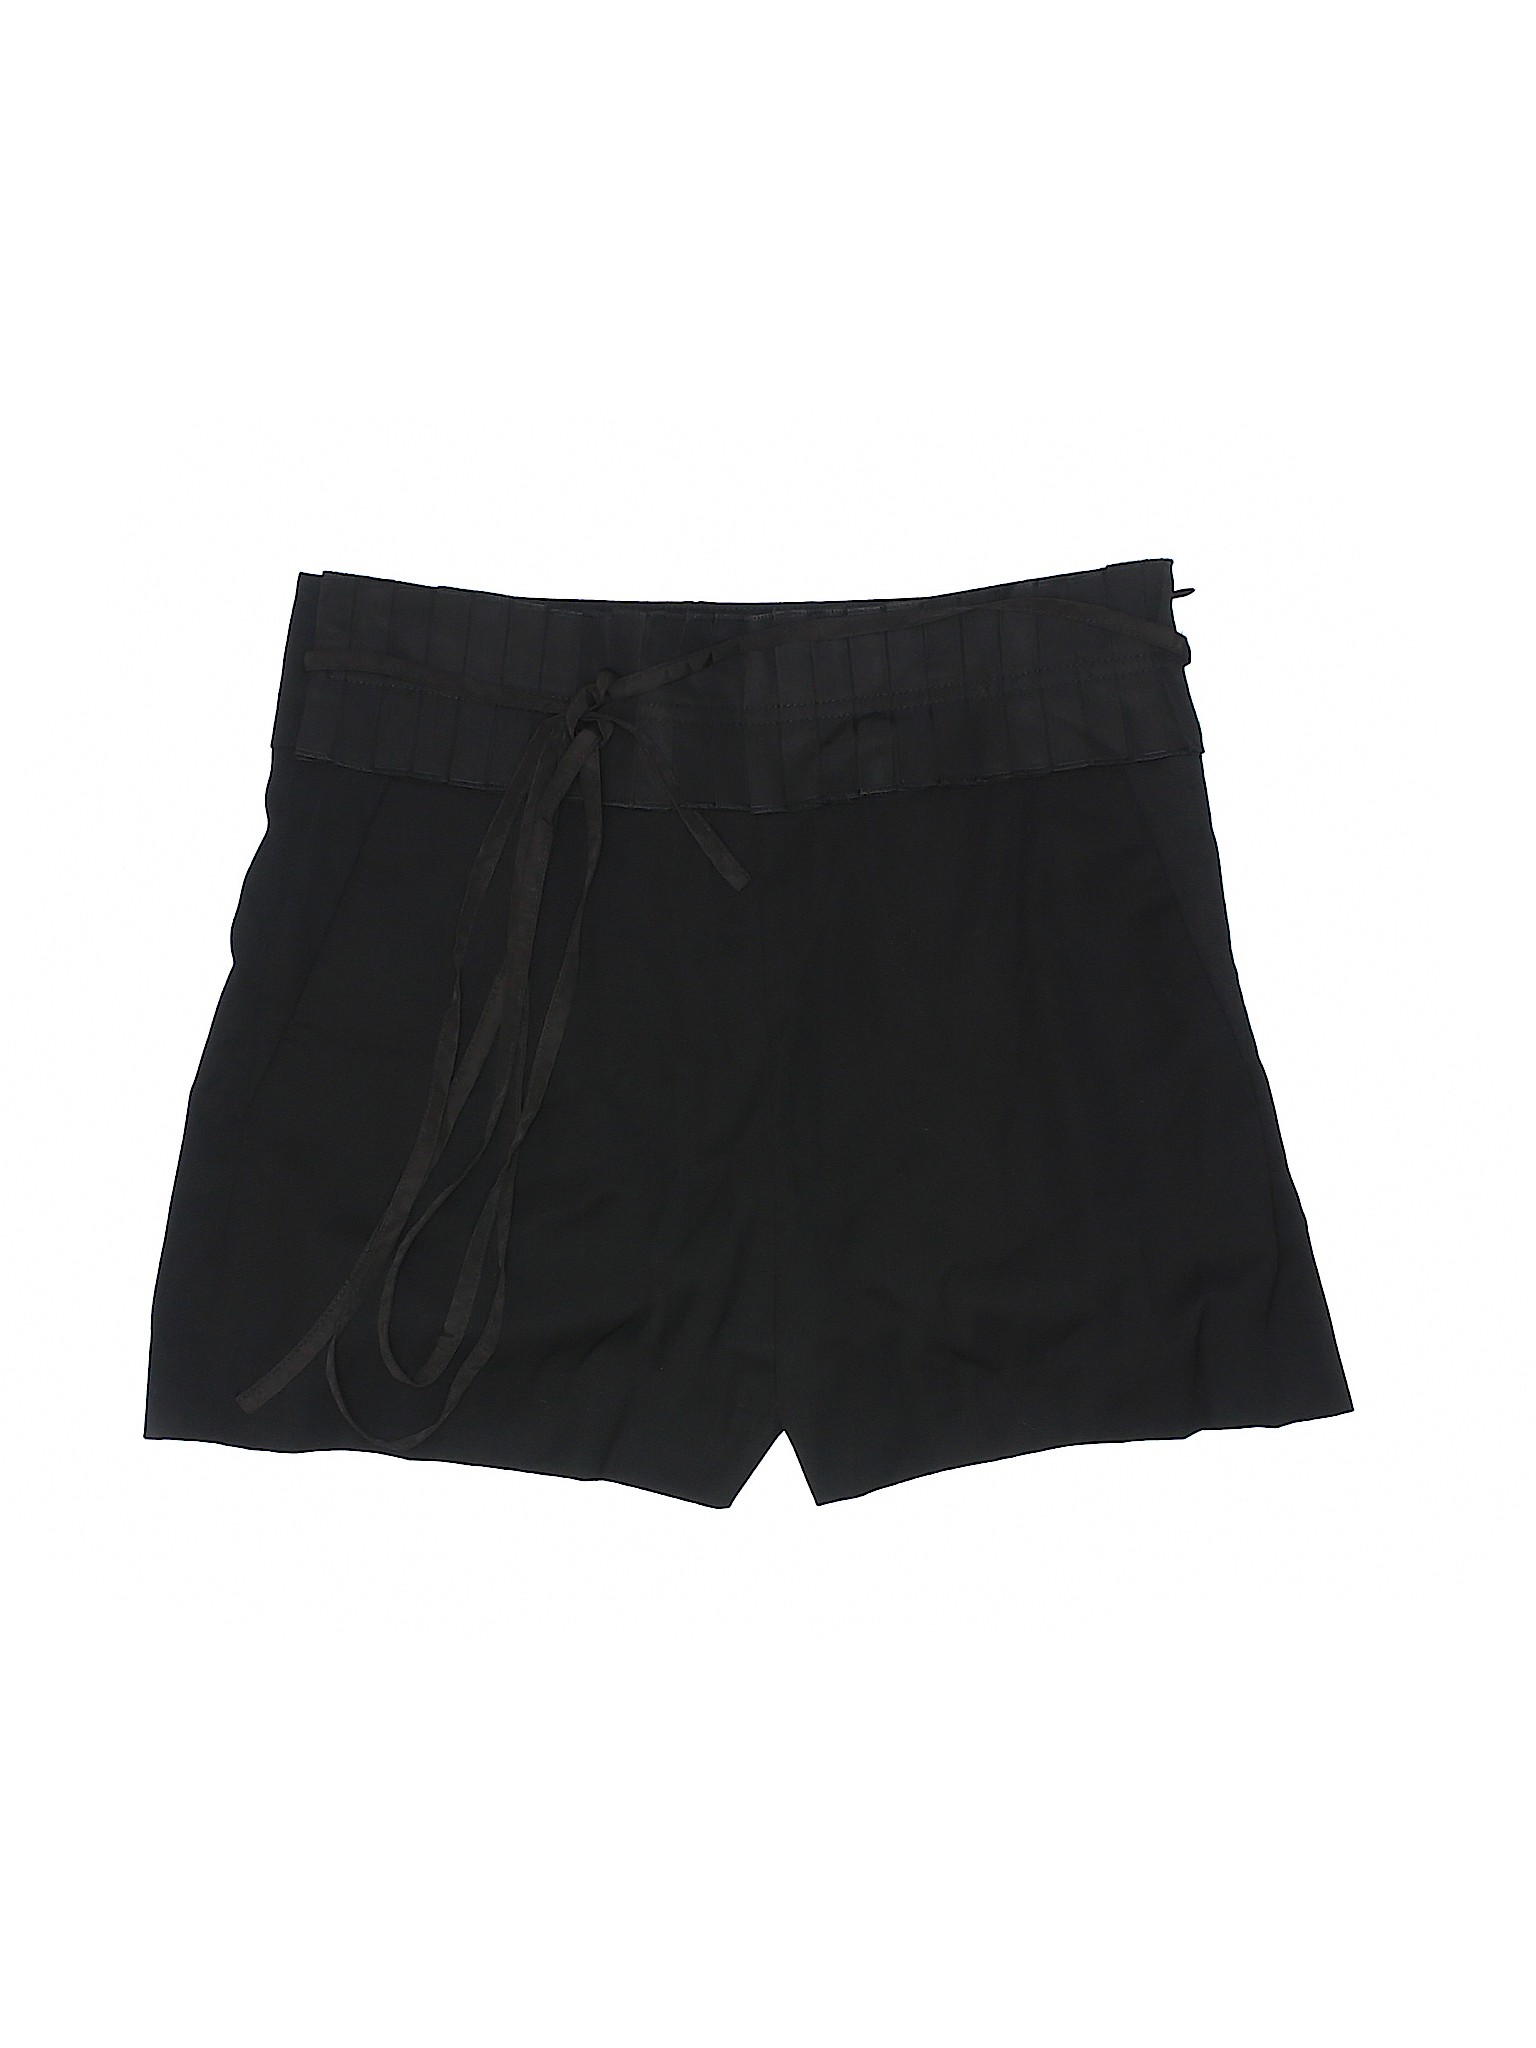 Jil Sander 100% Cotton Solid Black Shorts Size UNKNOWN - 85% off | thredUP